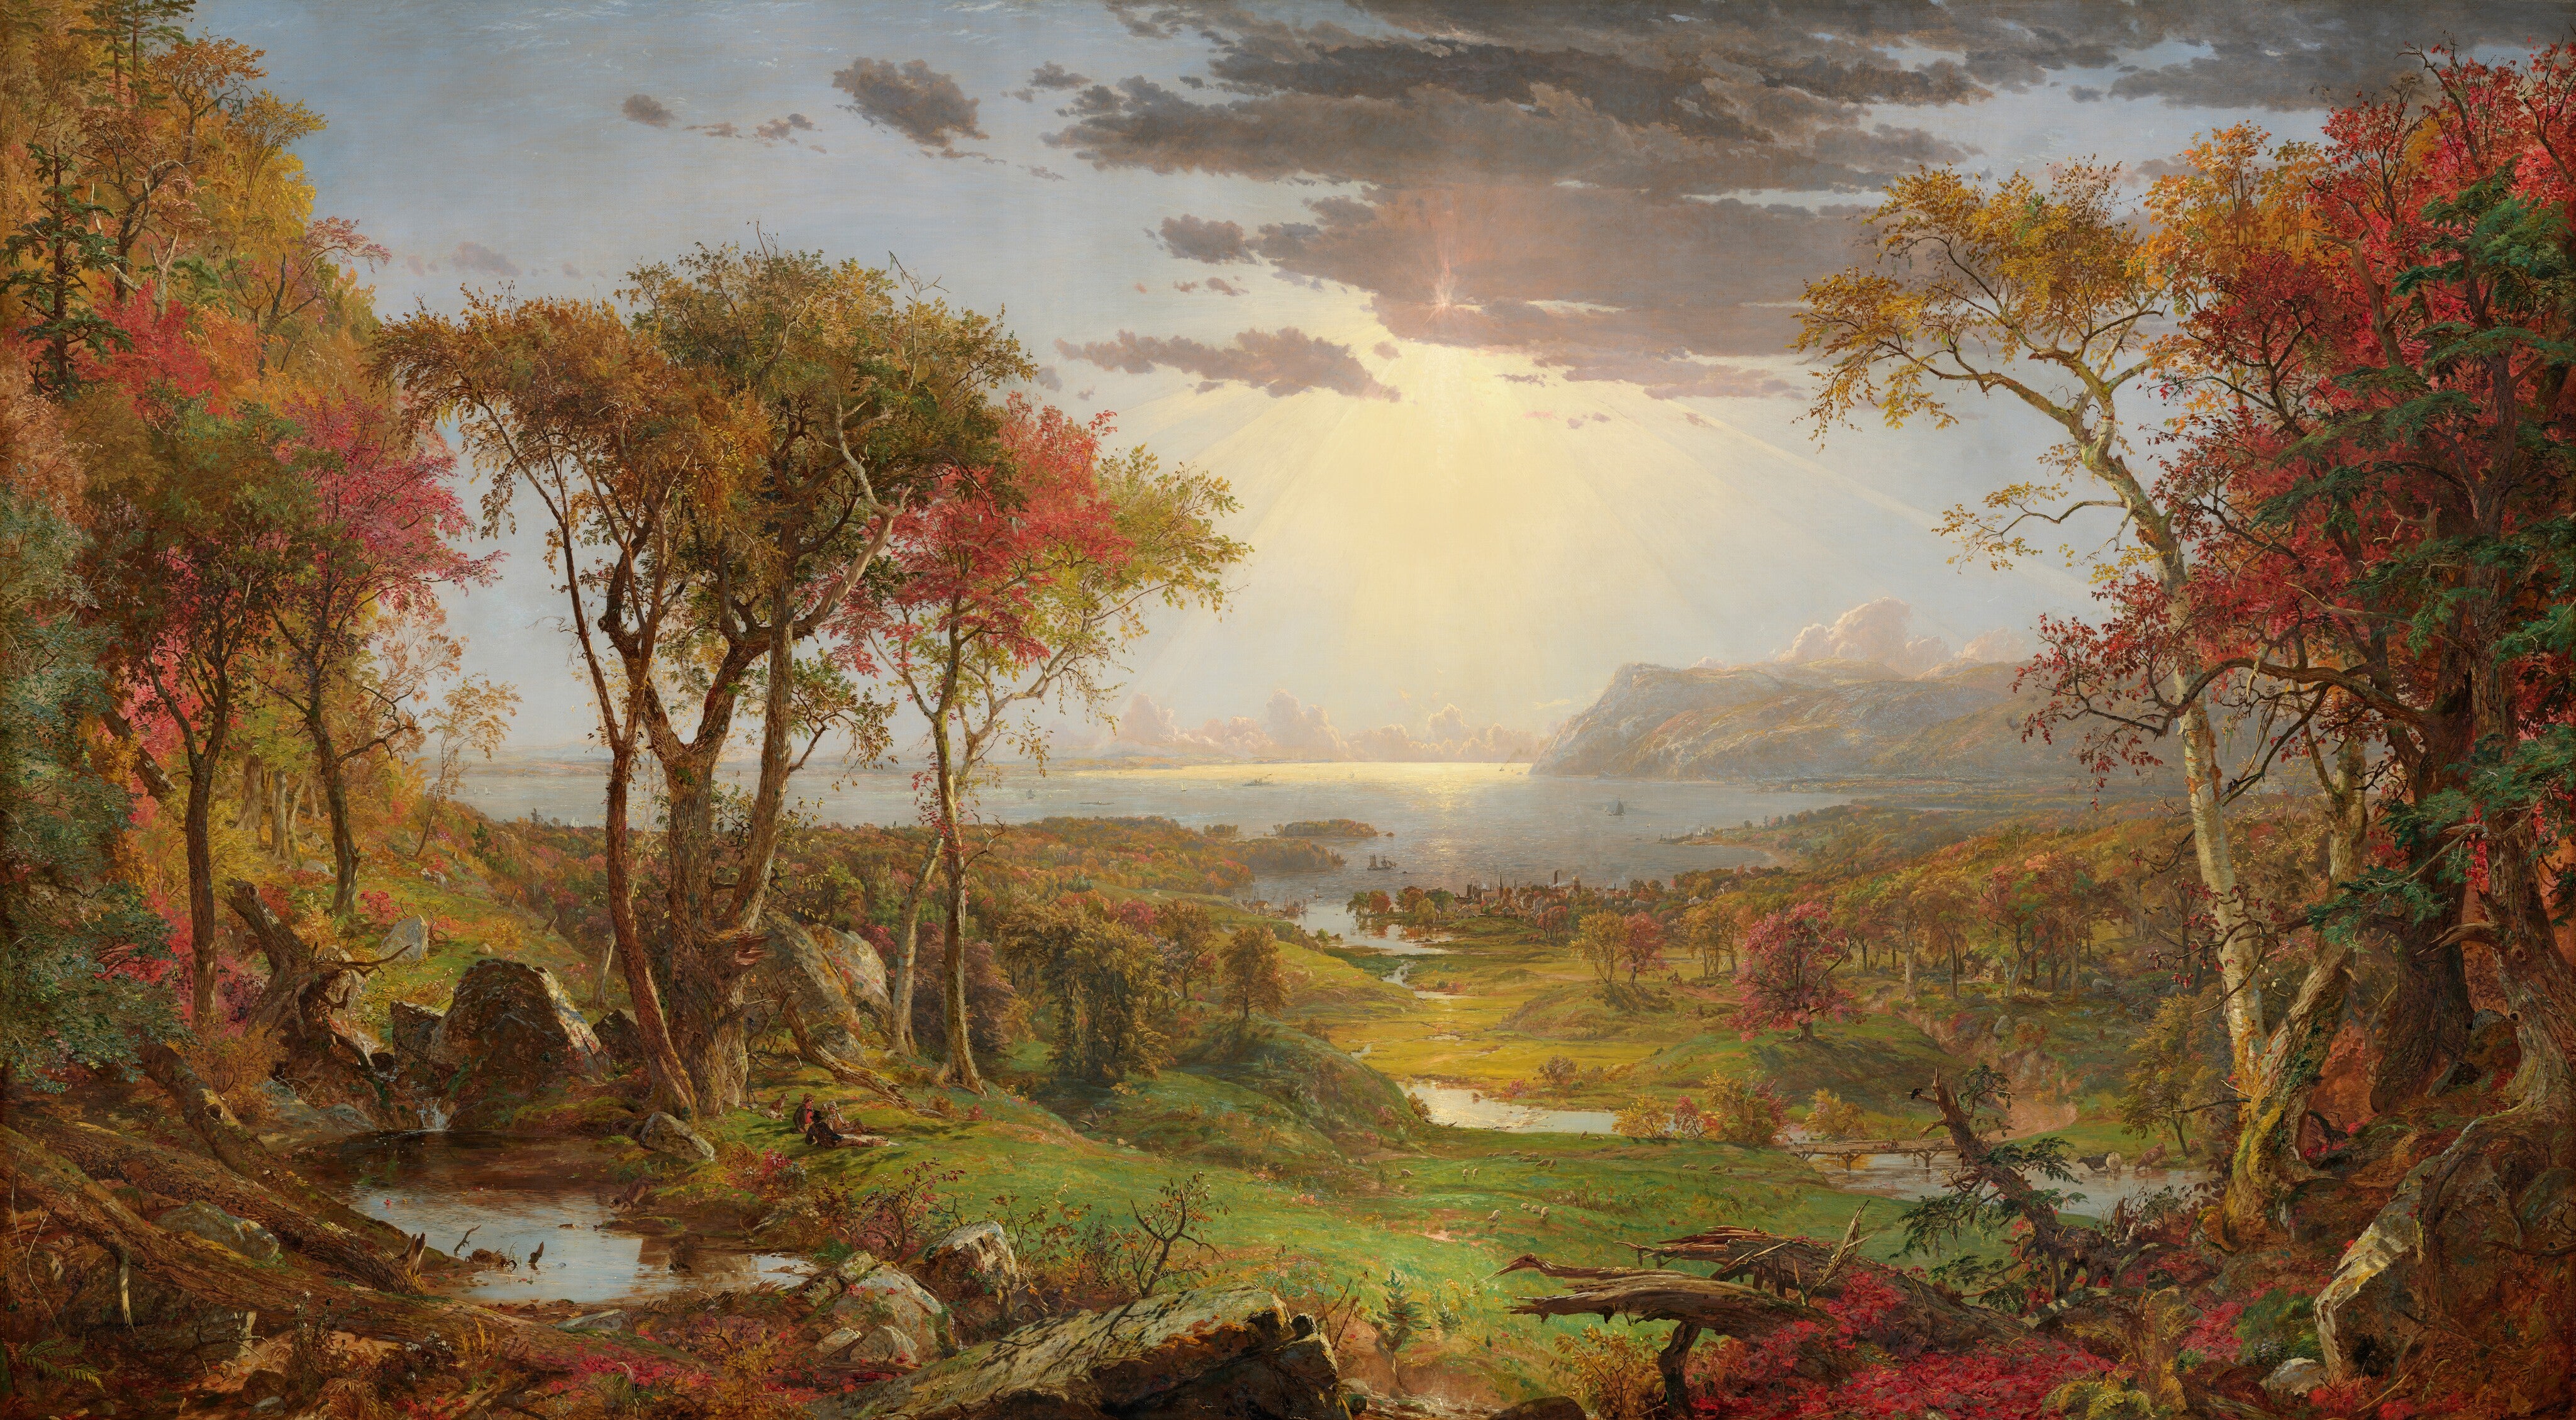 Autumn - On The Hudson River by Jasper Francis Crospey circa 1860